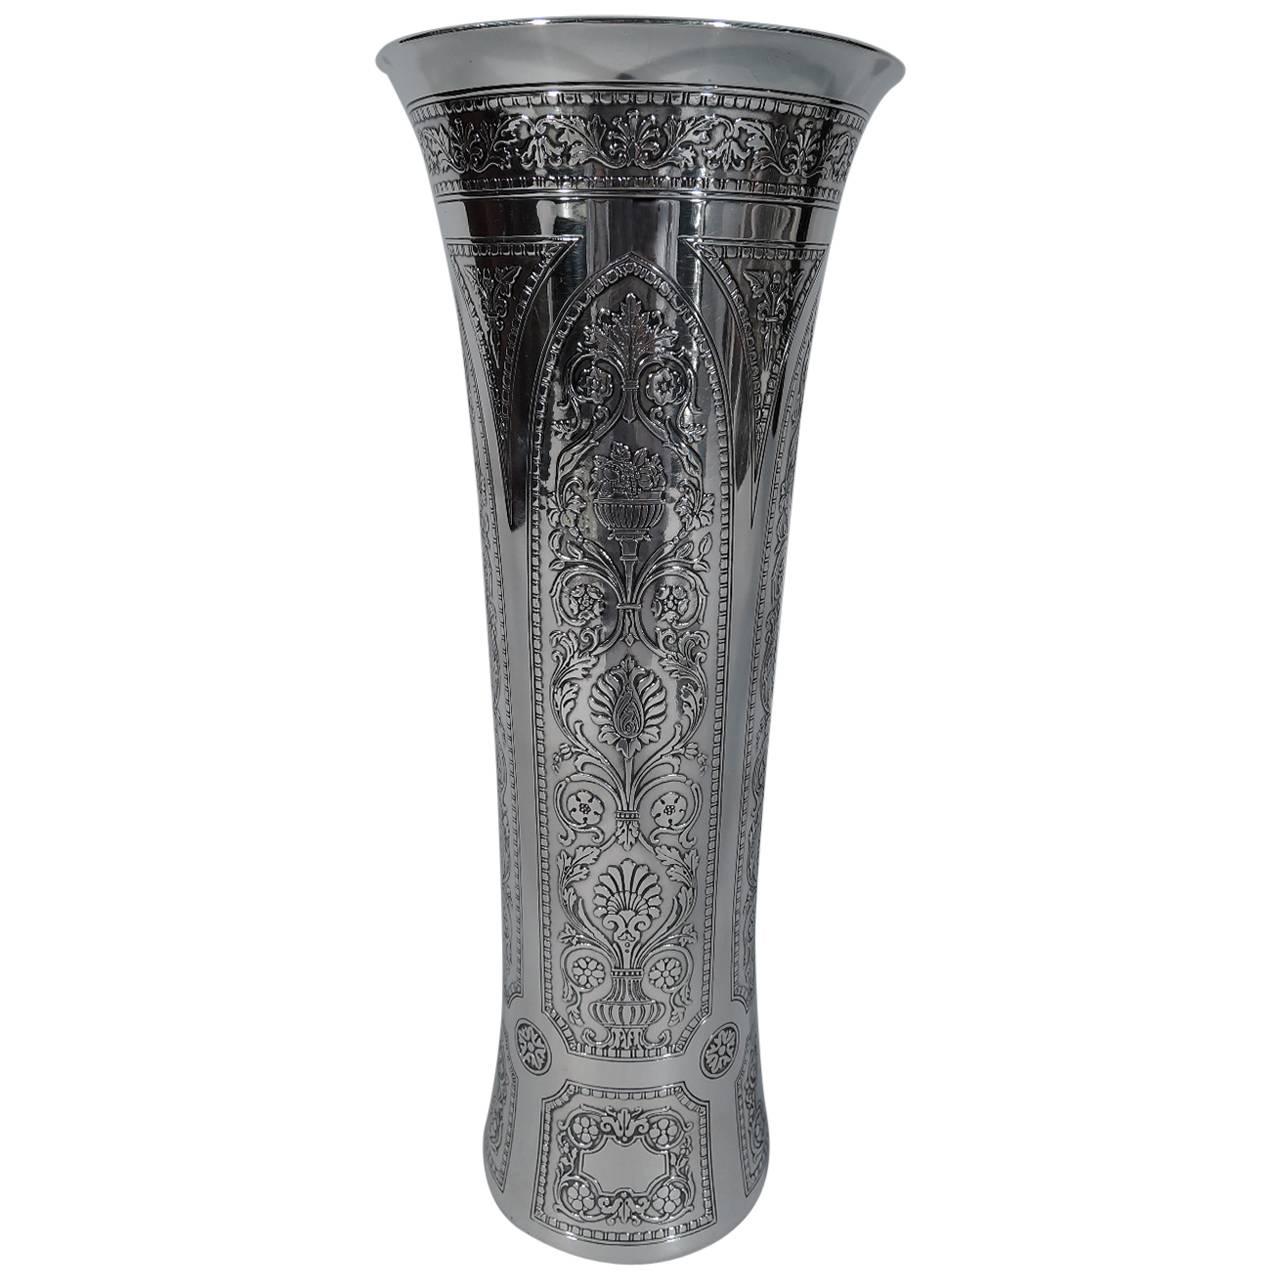 Distinctive Edwardian Sterling Silver Vase by Tiffany & Co.